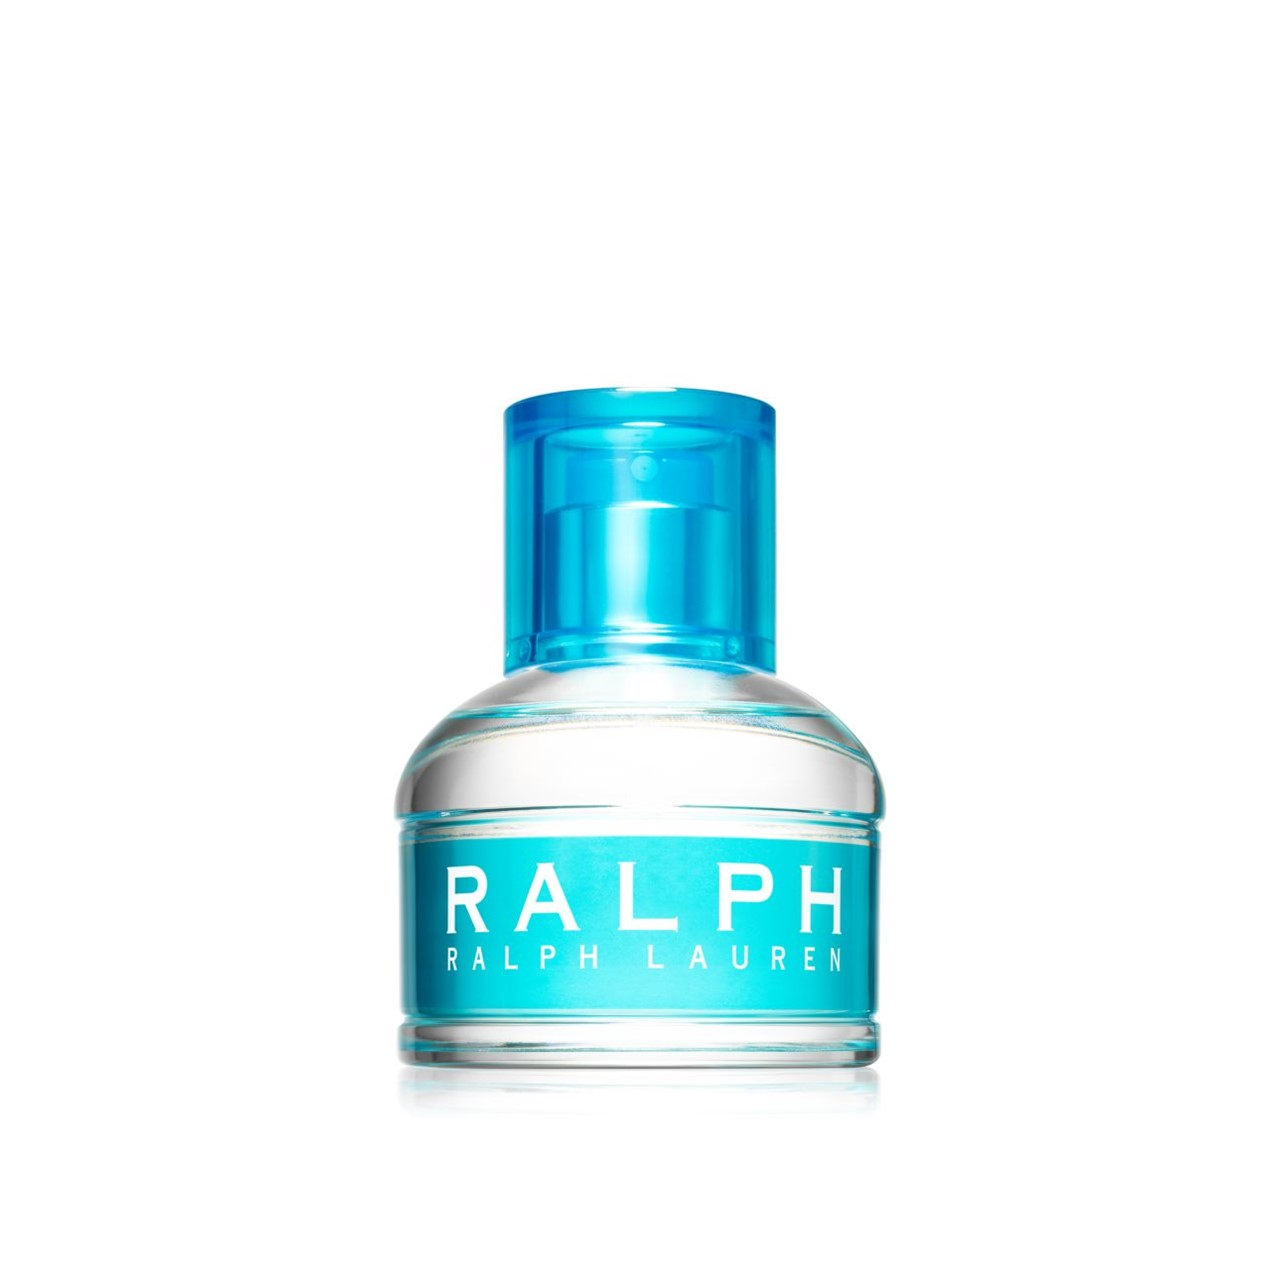 Buy Ralph Lauren Toilette oz) (1.0fl 30ml · Ralph USA de Eau